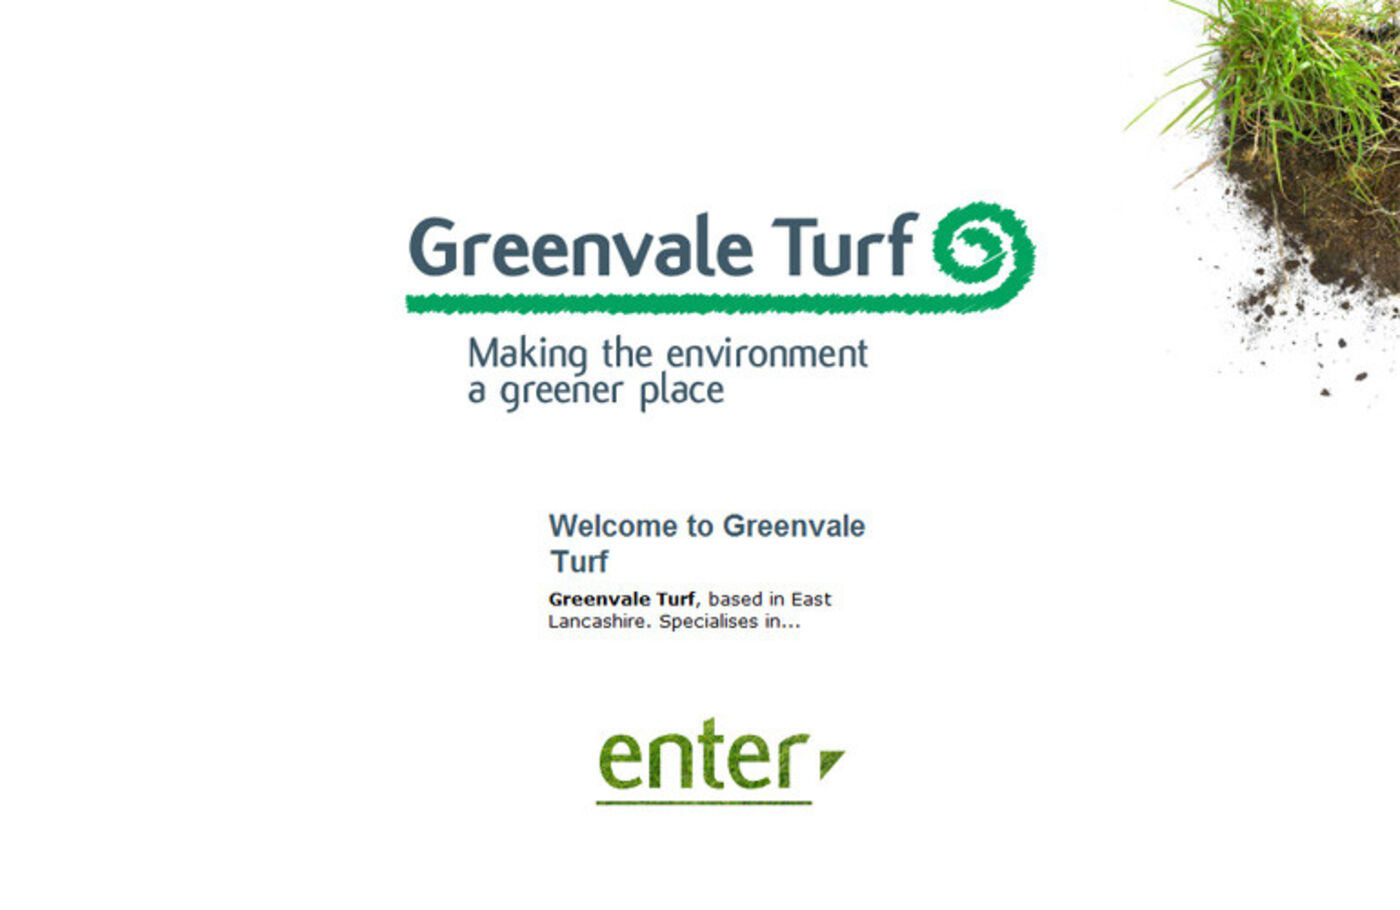 Greenvale Turf Welcome